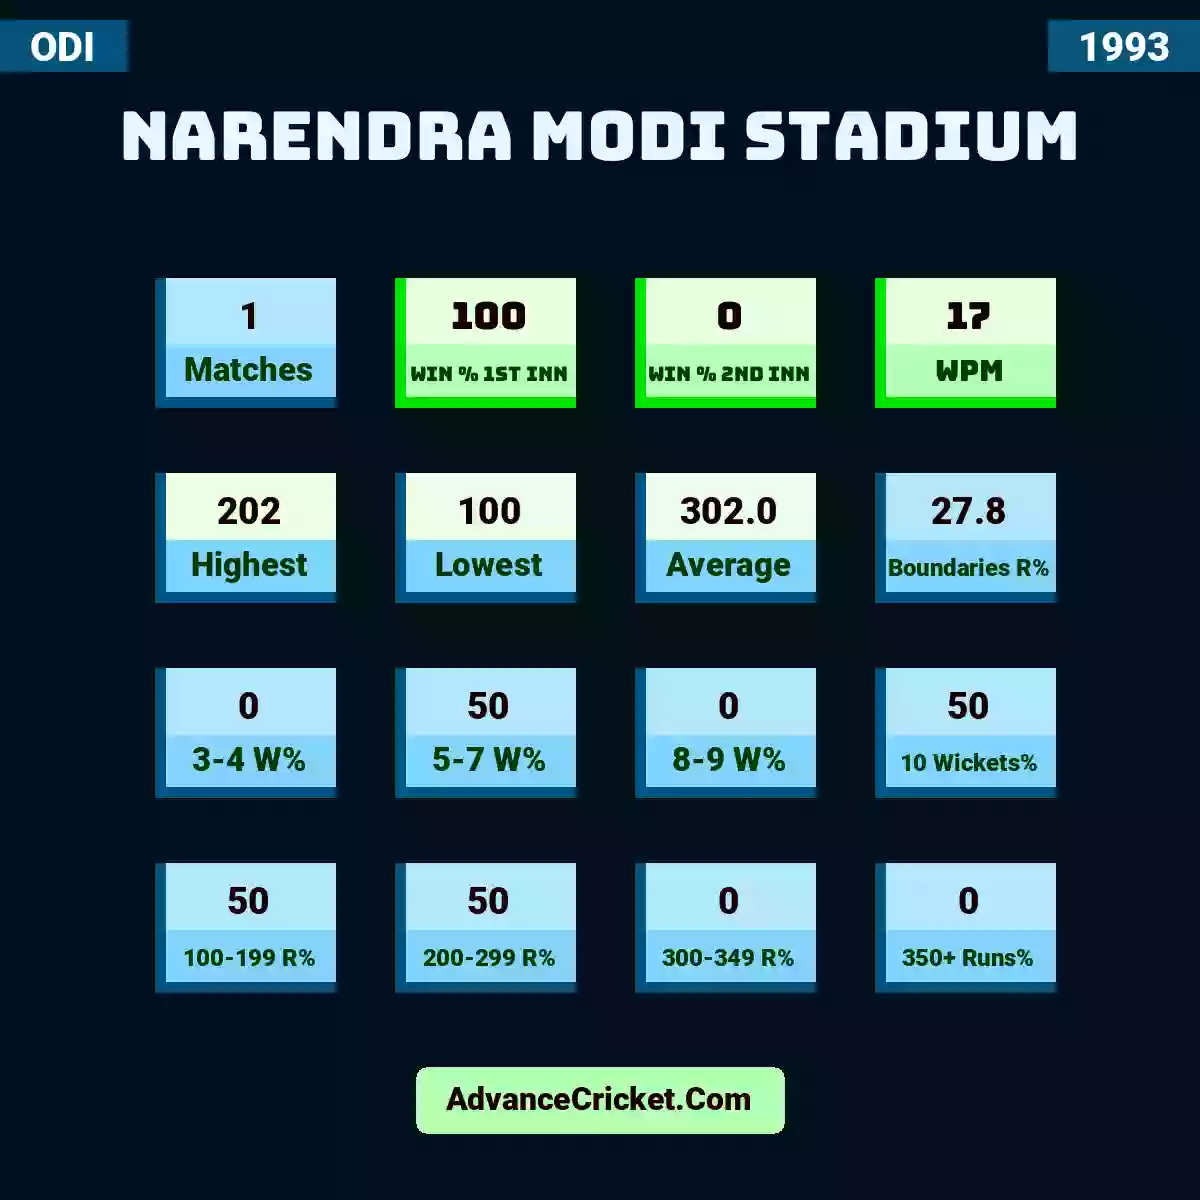 Image showing Narendra Modi Stadium with Matches: 1, Win % 1st Inn: 100, Win % 2nd Inn: 0, WPM: 17, Highest: 202, Lowest: 100, Average: 302.0, Boundaries R%: 27.8, 3-4 W%: 0, 5-7 W%: 50, 8-9 W%: 0, 10 Wickets%: 50, 100-199 R%: 50, 200-299 R%: 50, 300-349 R%: 0, 350+ Runs%: 0.